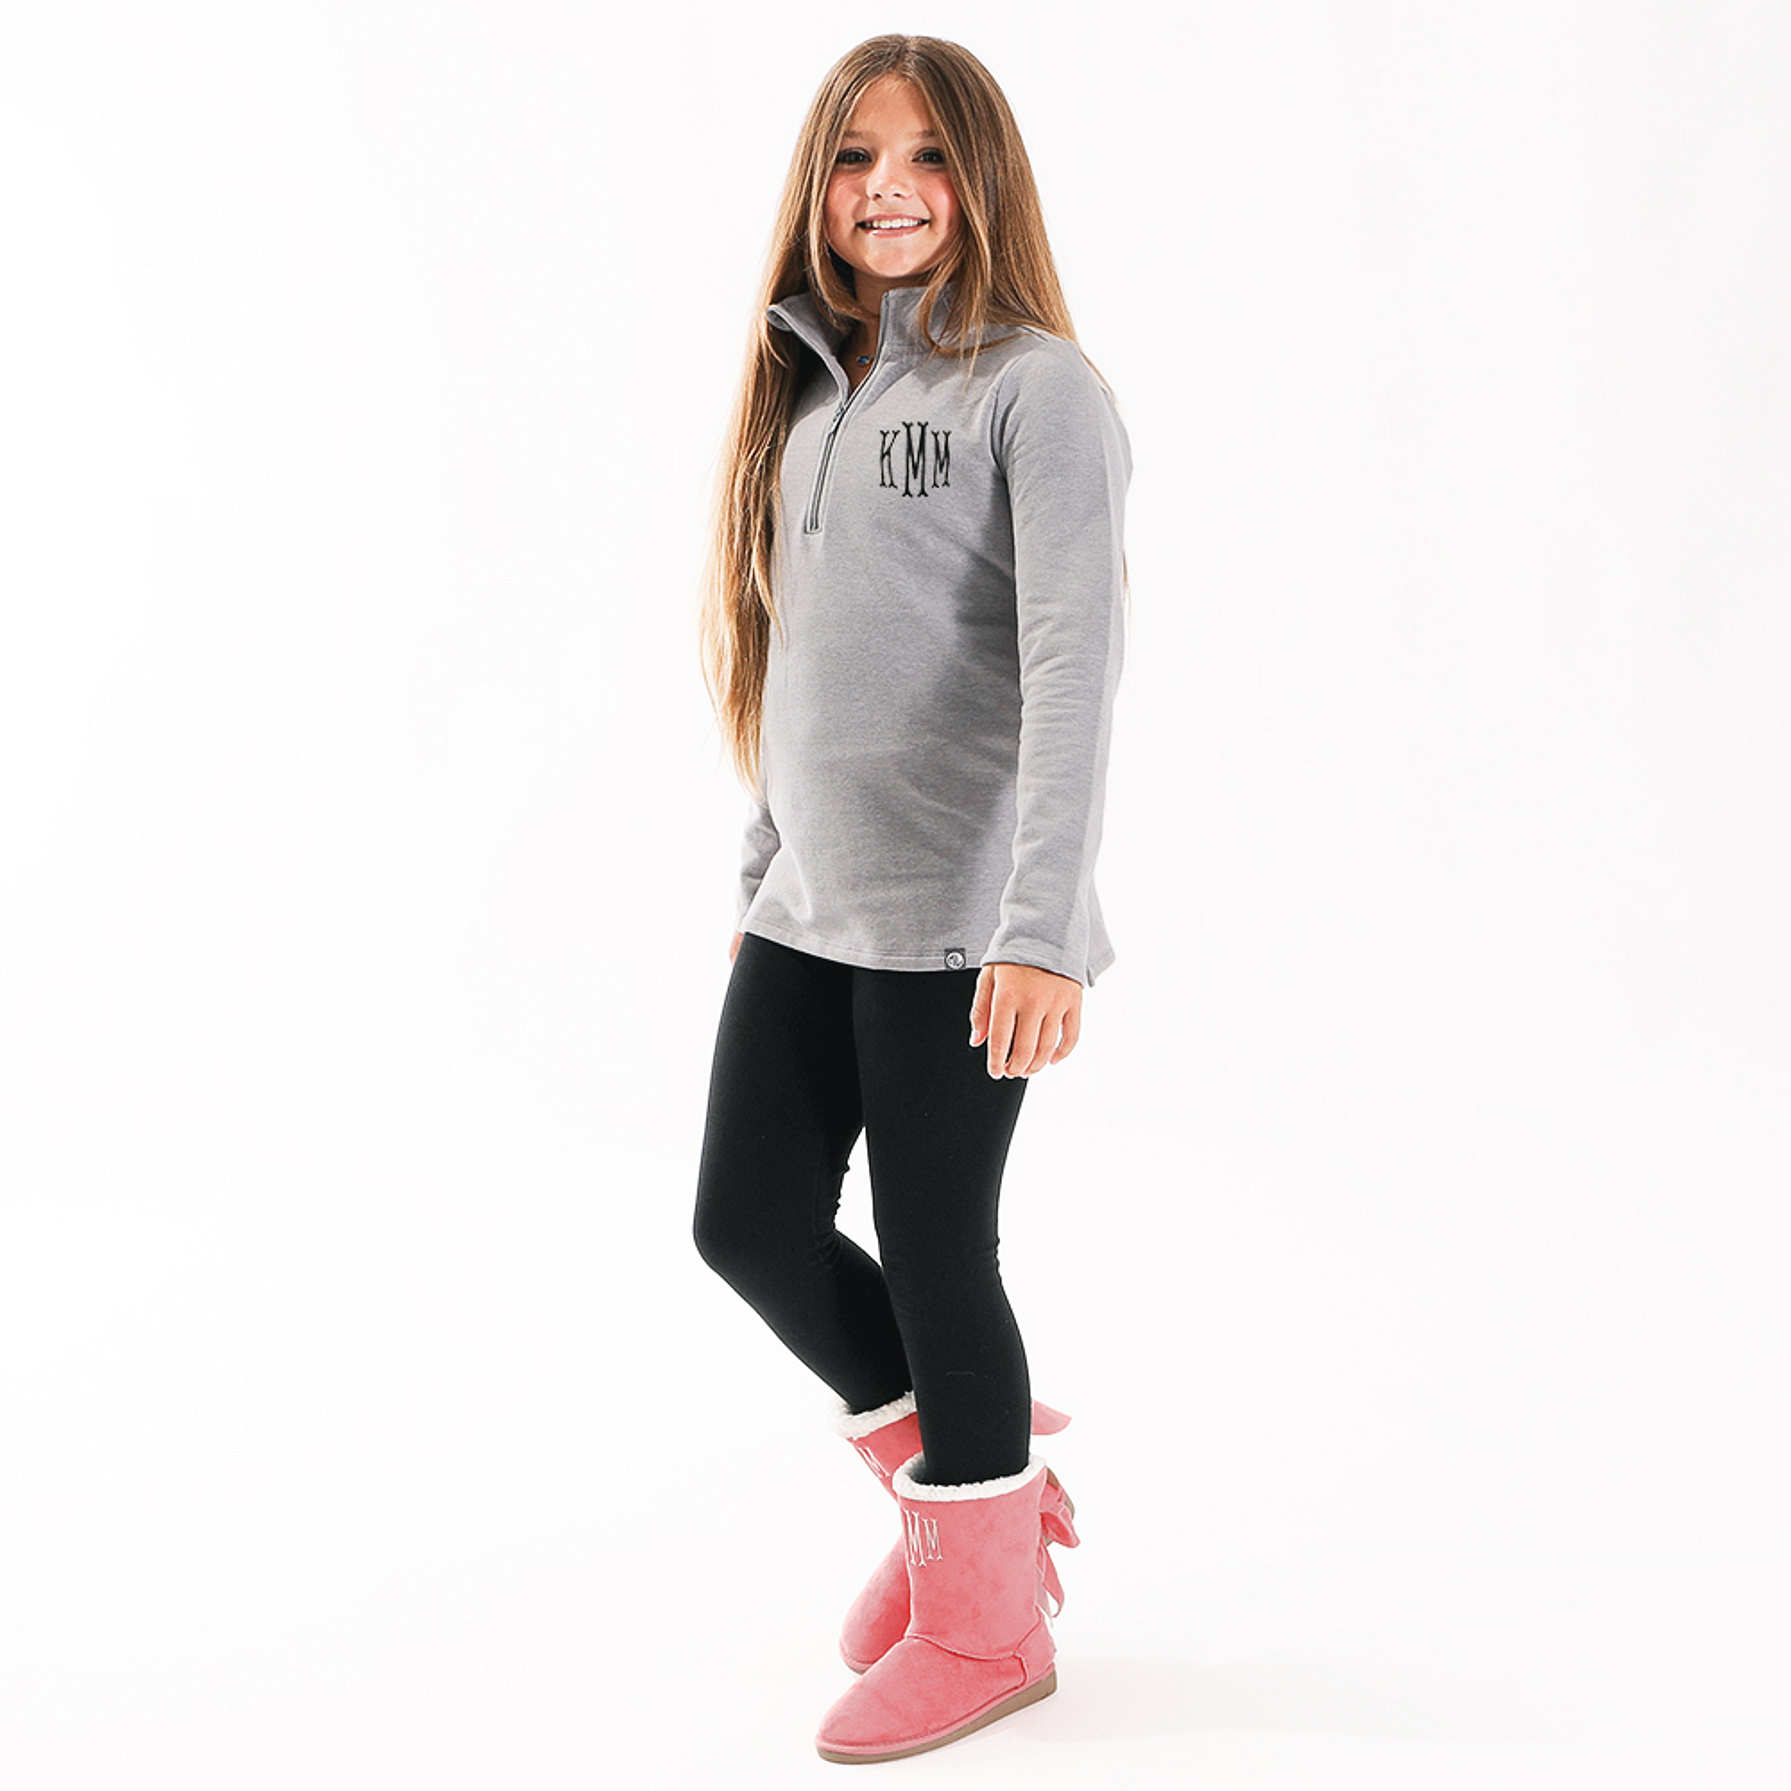 Marleylilly Kids | Personalized Pullover Sweatshirt